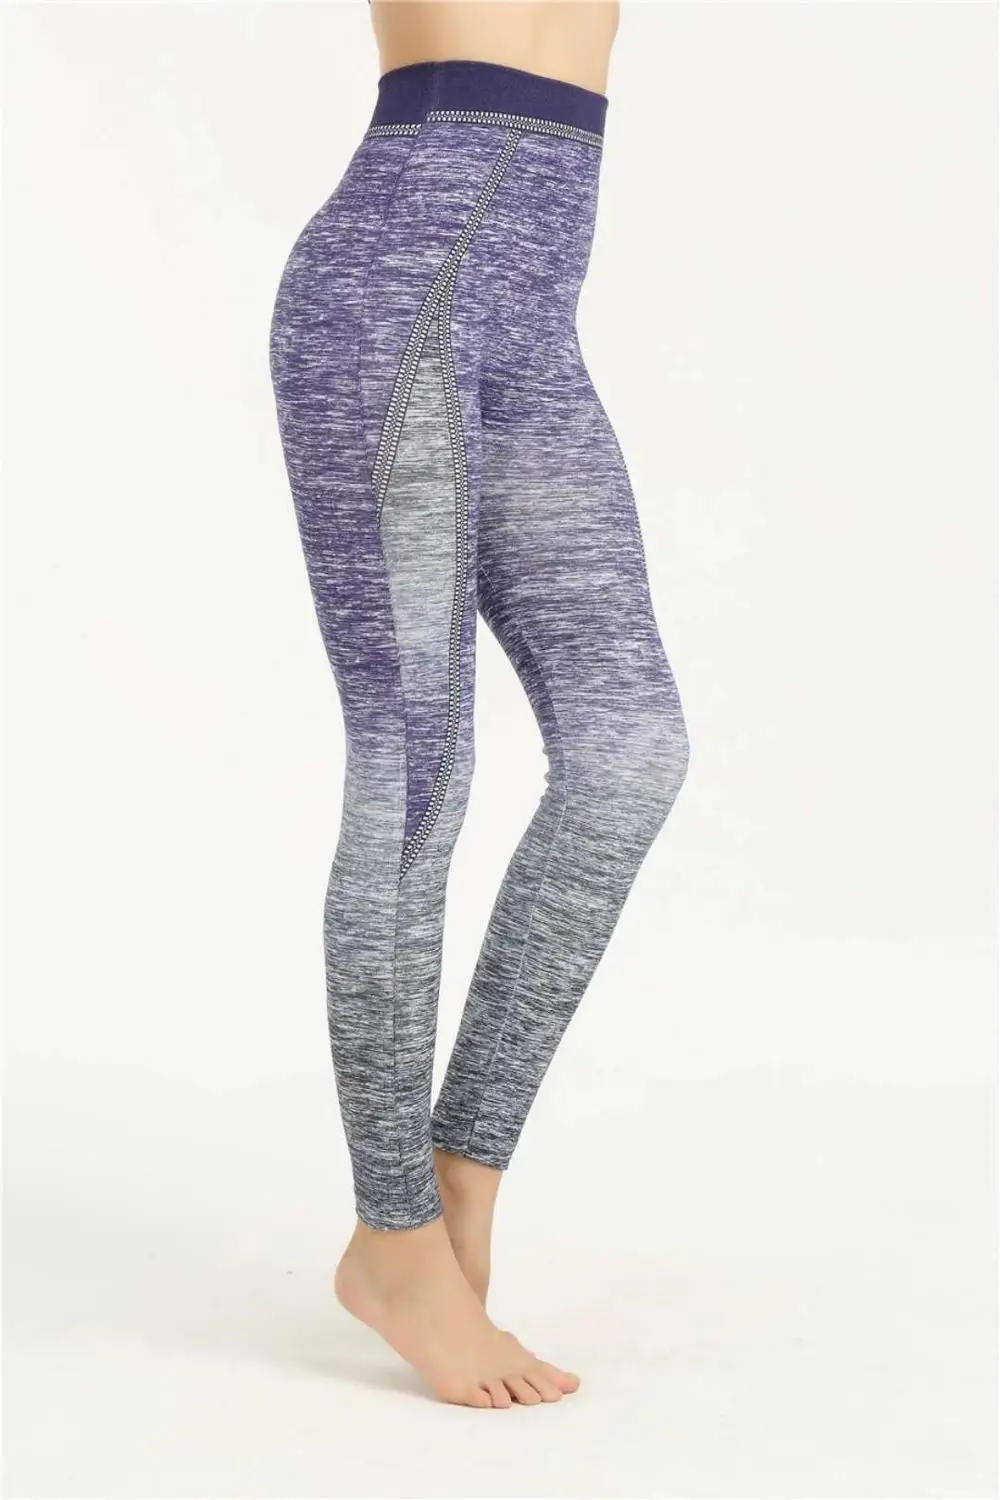 Assun 2018 Yoga Pants Mature Women Legging High Quality Yoga Pants Womens Leggings Seamless